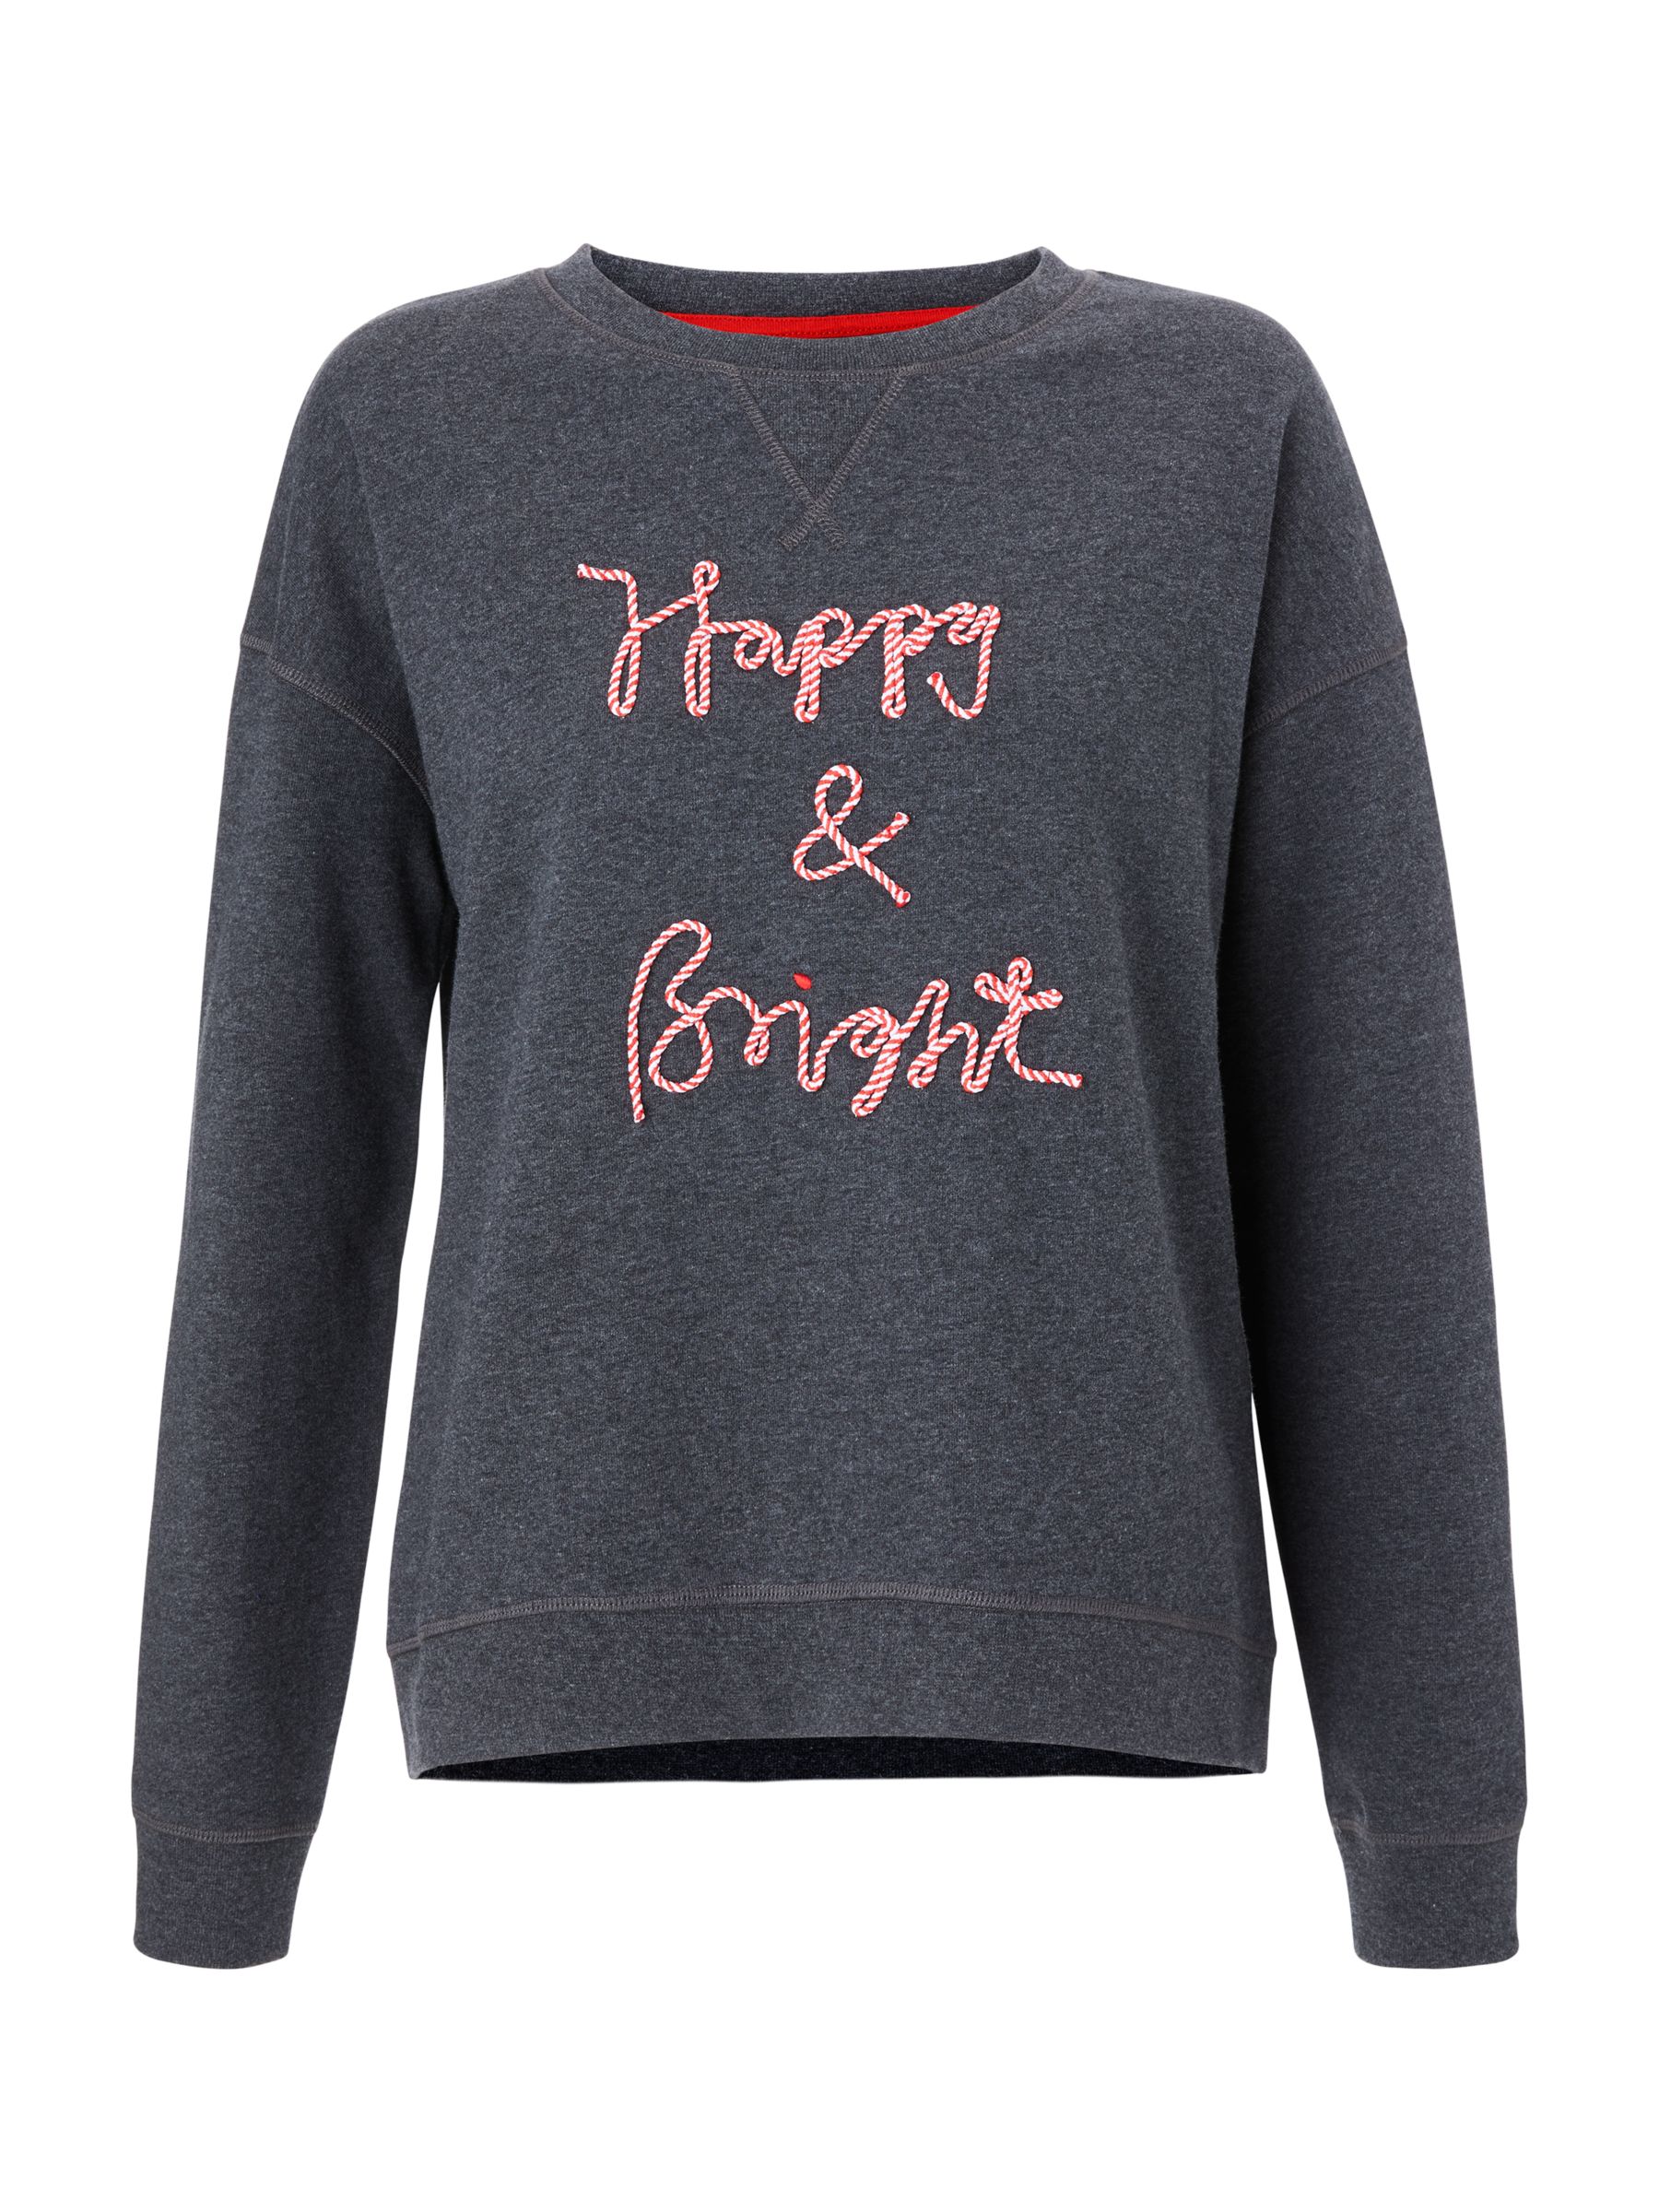 Boden Arabella Sweatshirt, Happy and Bright at John Lewis & Partners